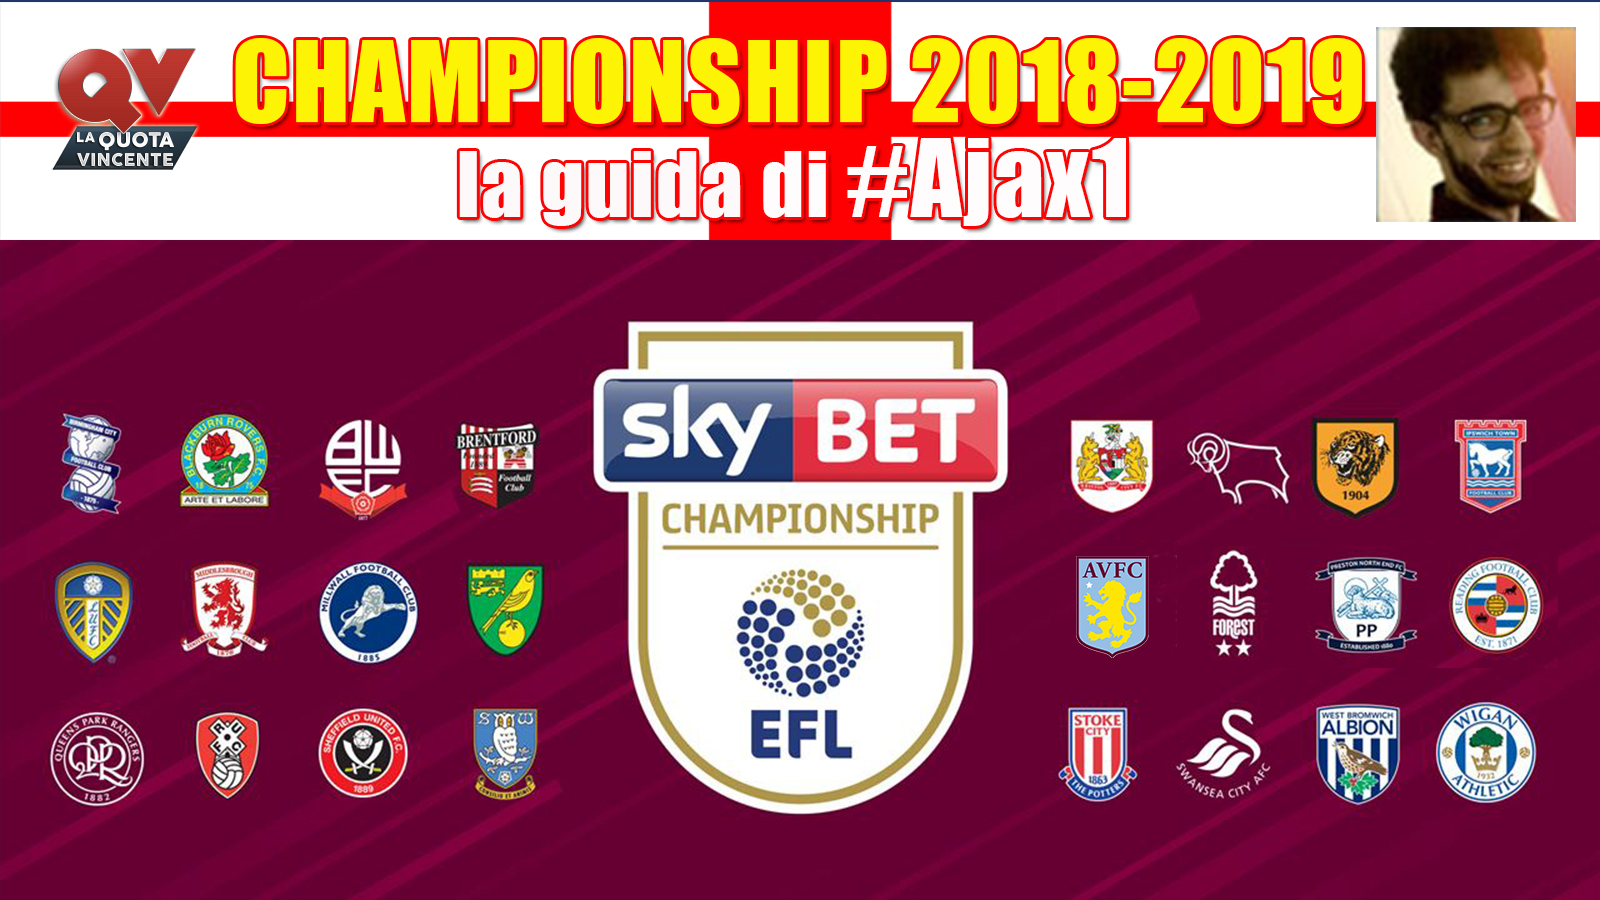 Championship 2018-2019 guida